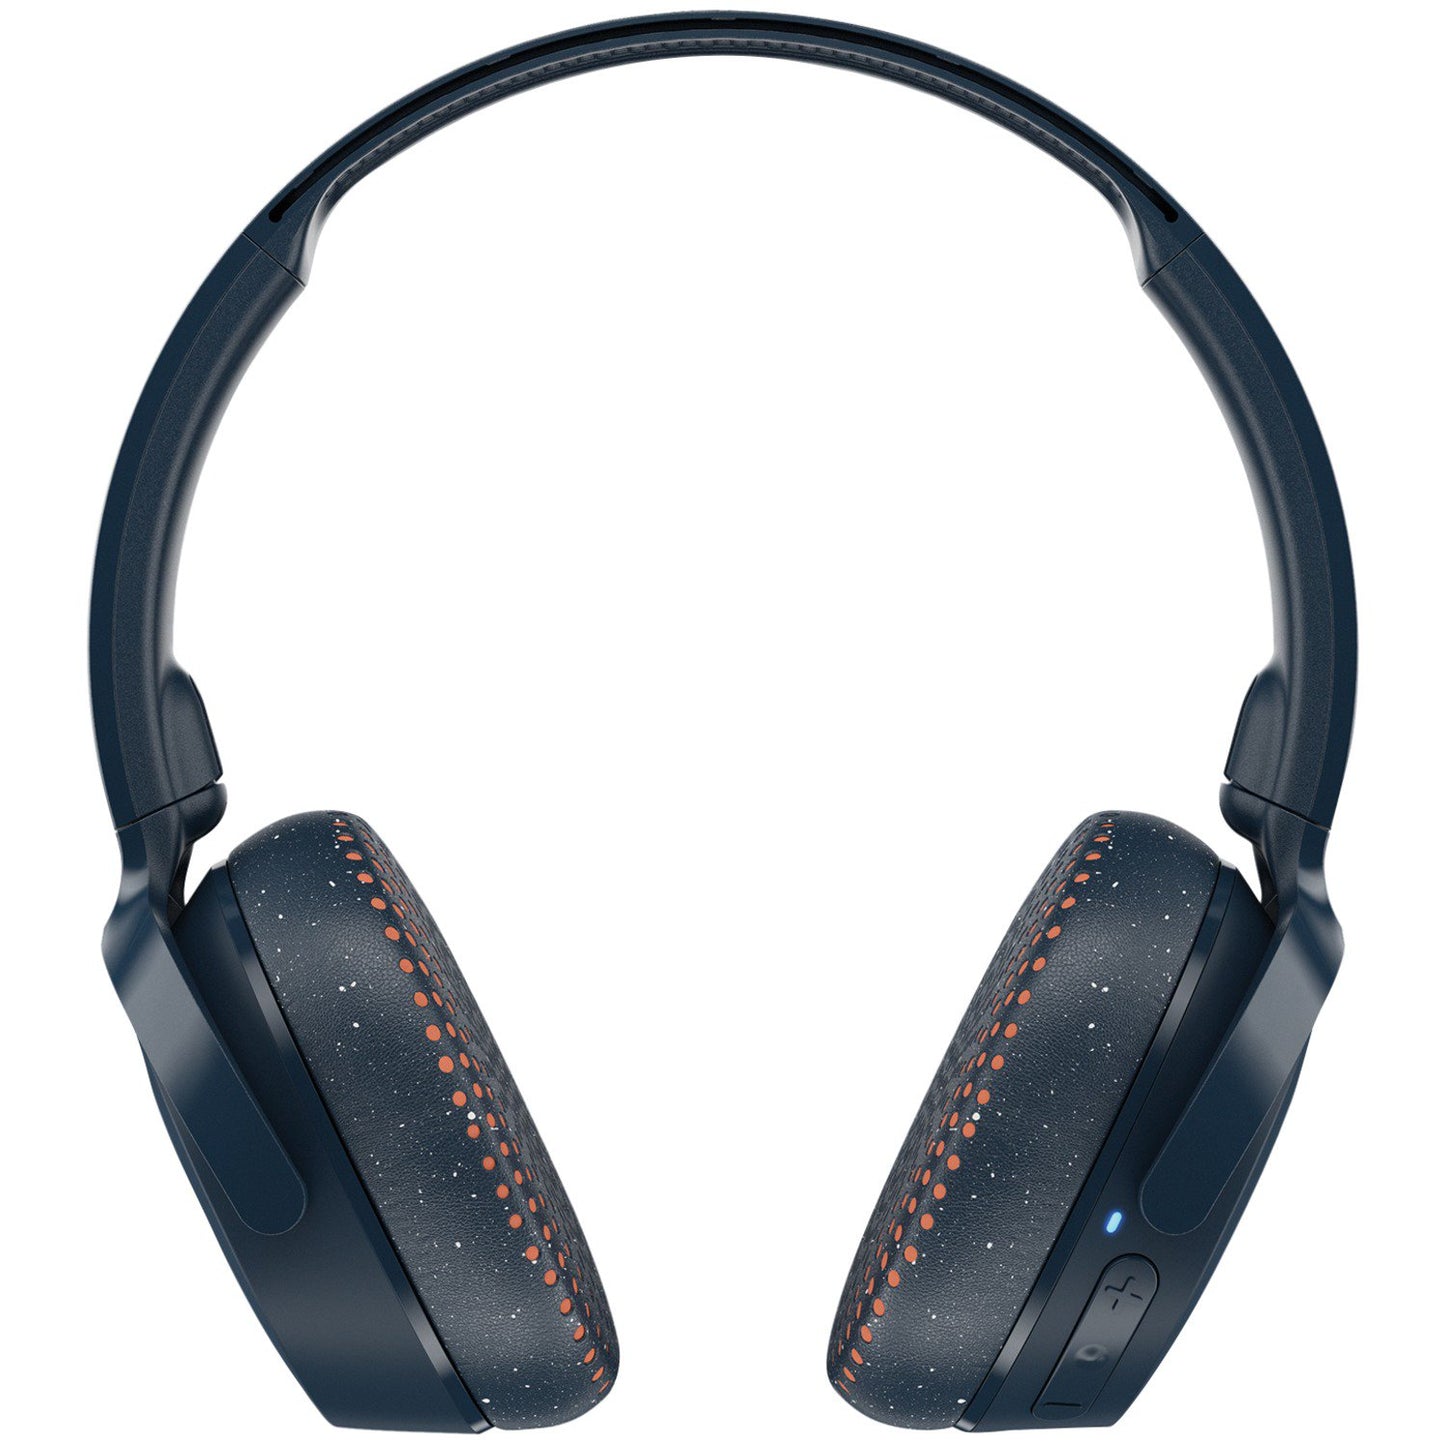 S5PXY-L636 Headphones from SKULLCANDY